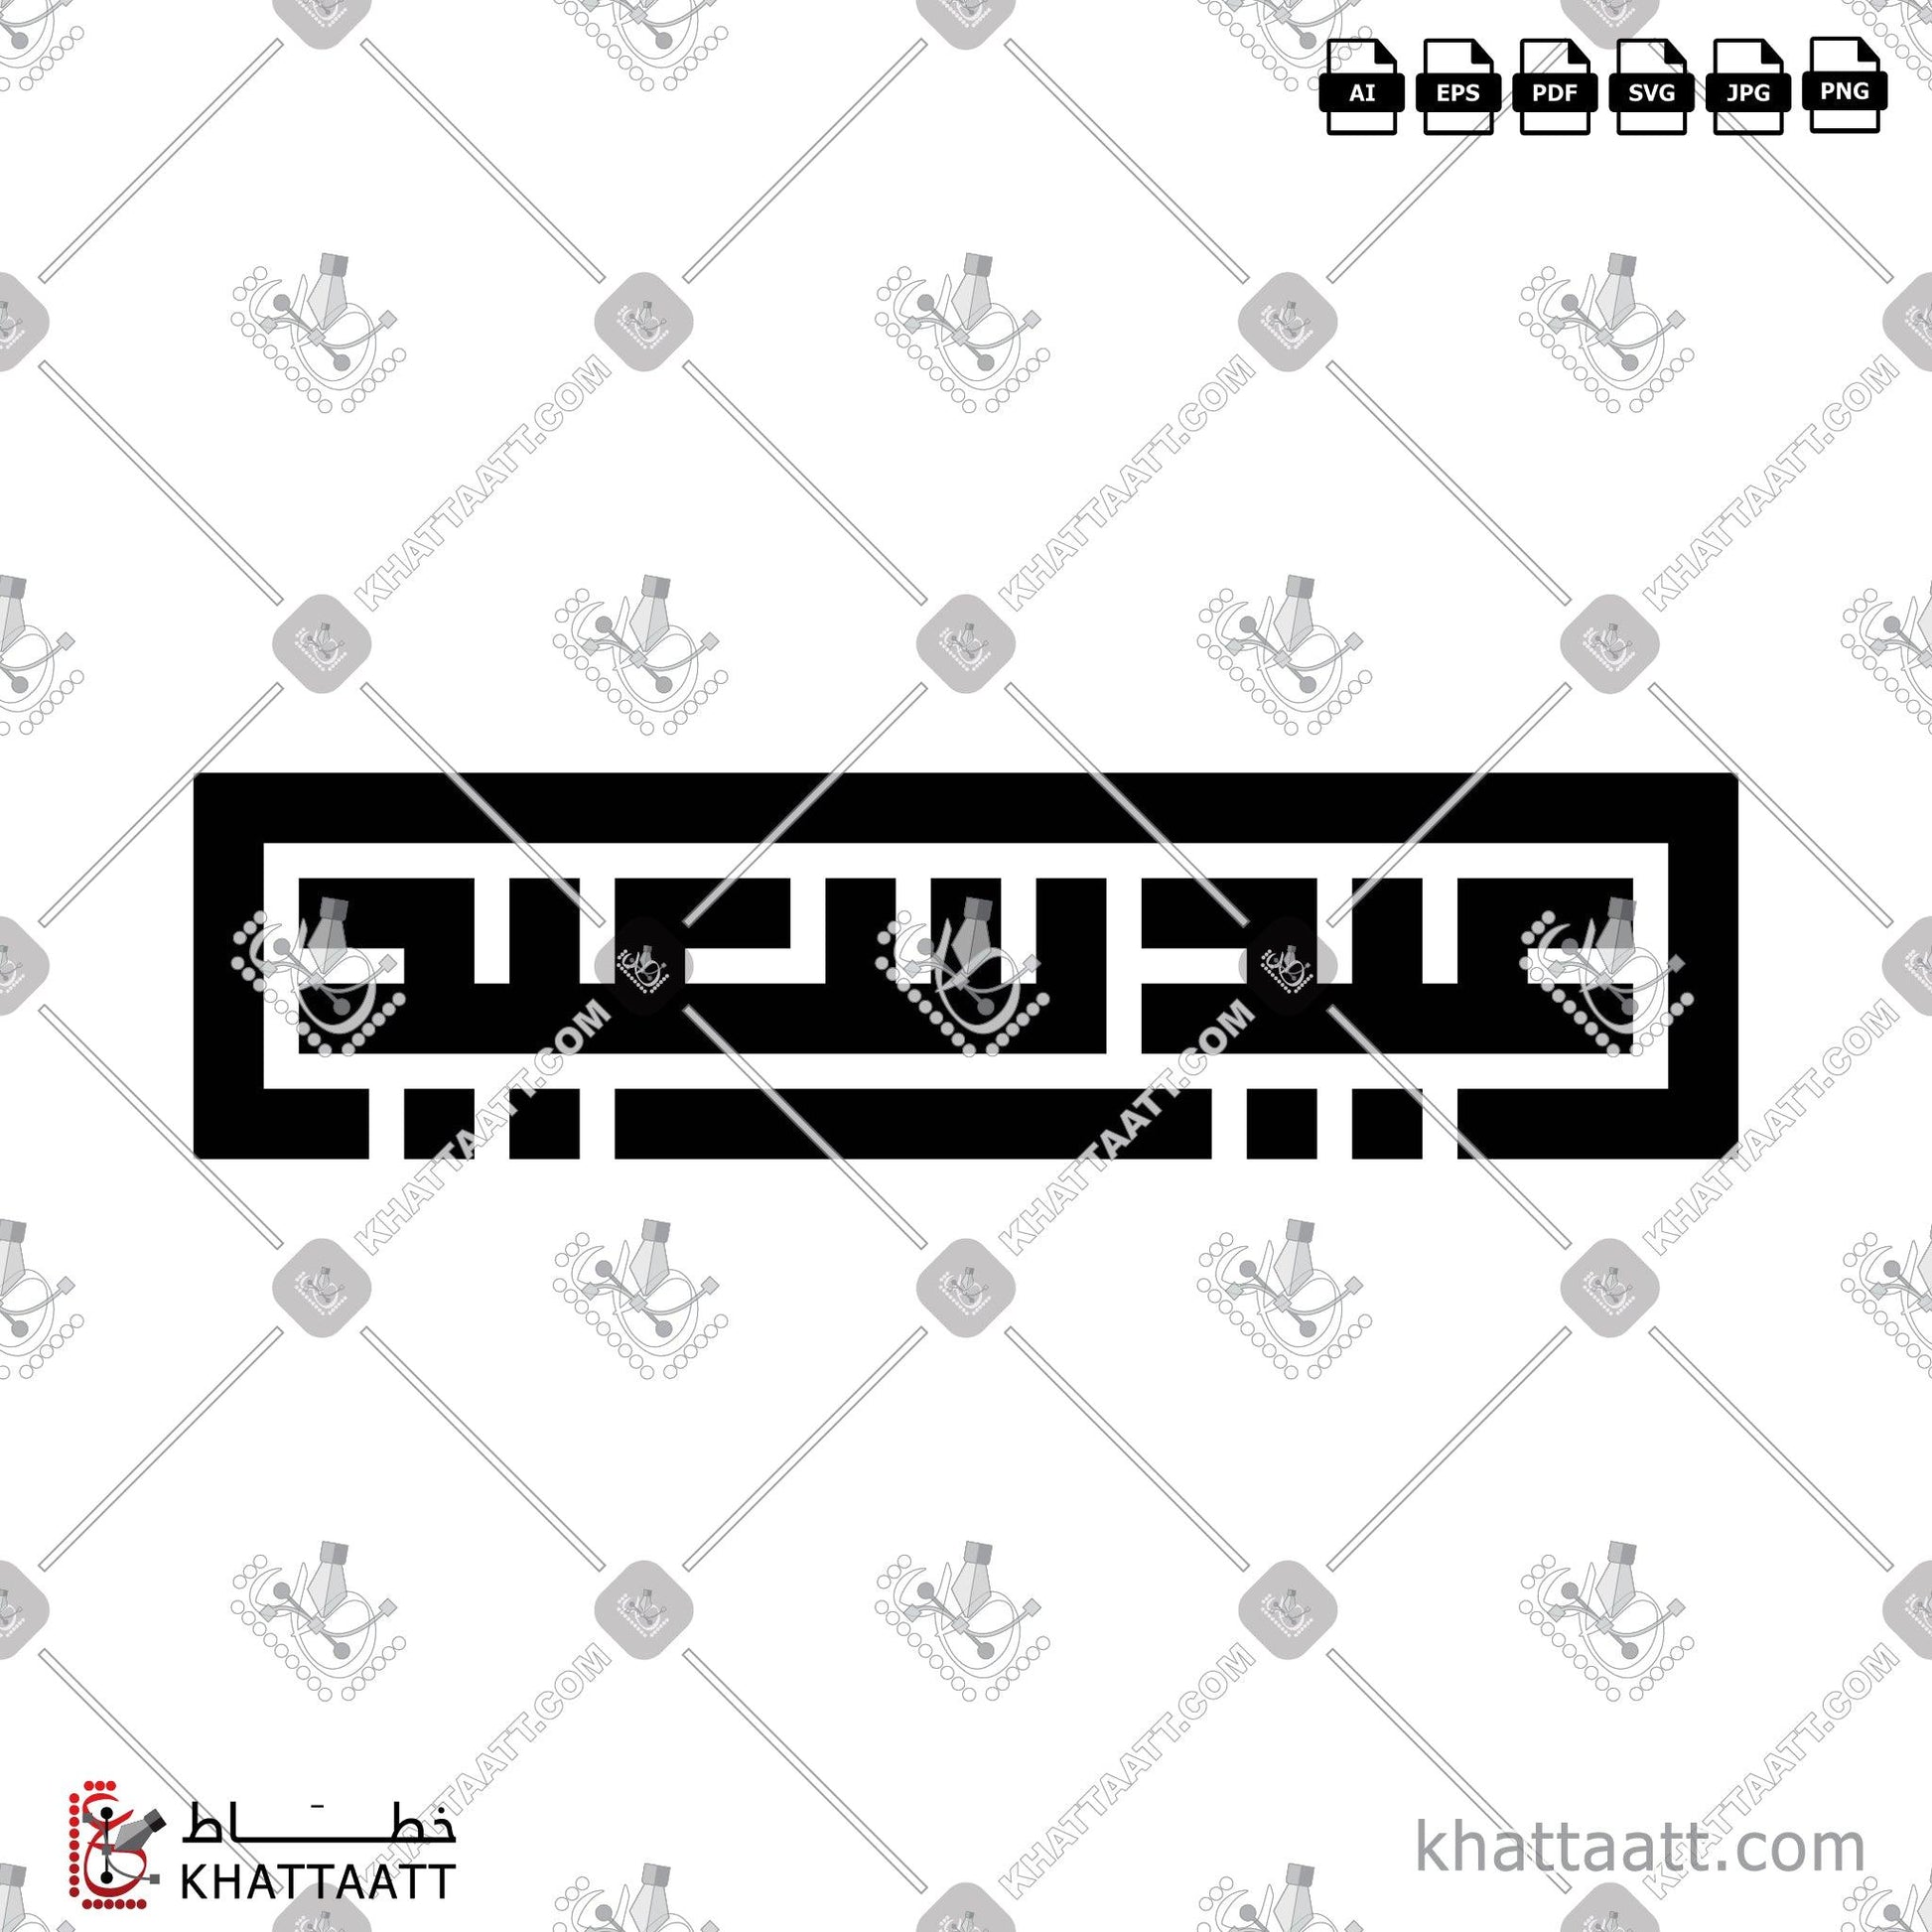 Download Arabic Calligraphy of Happy Eid - عيد سعيد in Kufi - الخط الكوفي in vector and .png